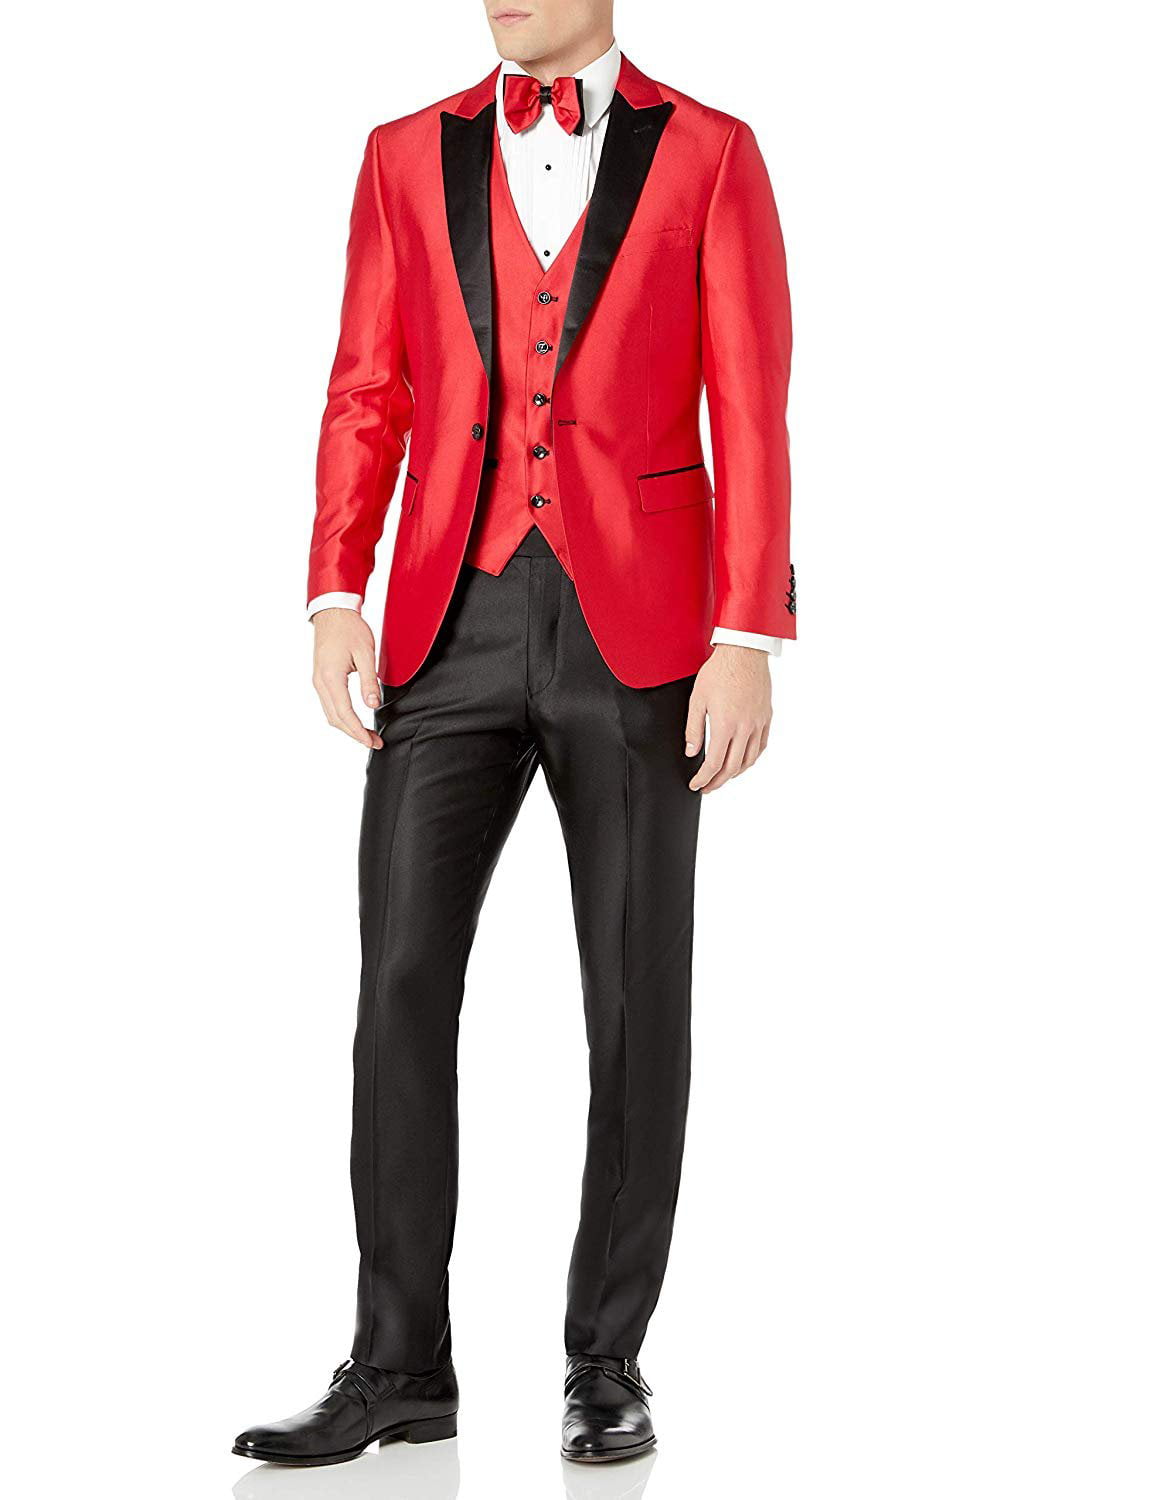 Wine Red Men's 3 Piece Suit with Black Peak Lapel Slim Fit Tuxedos Groomsman